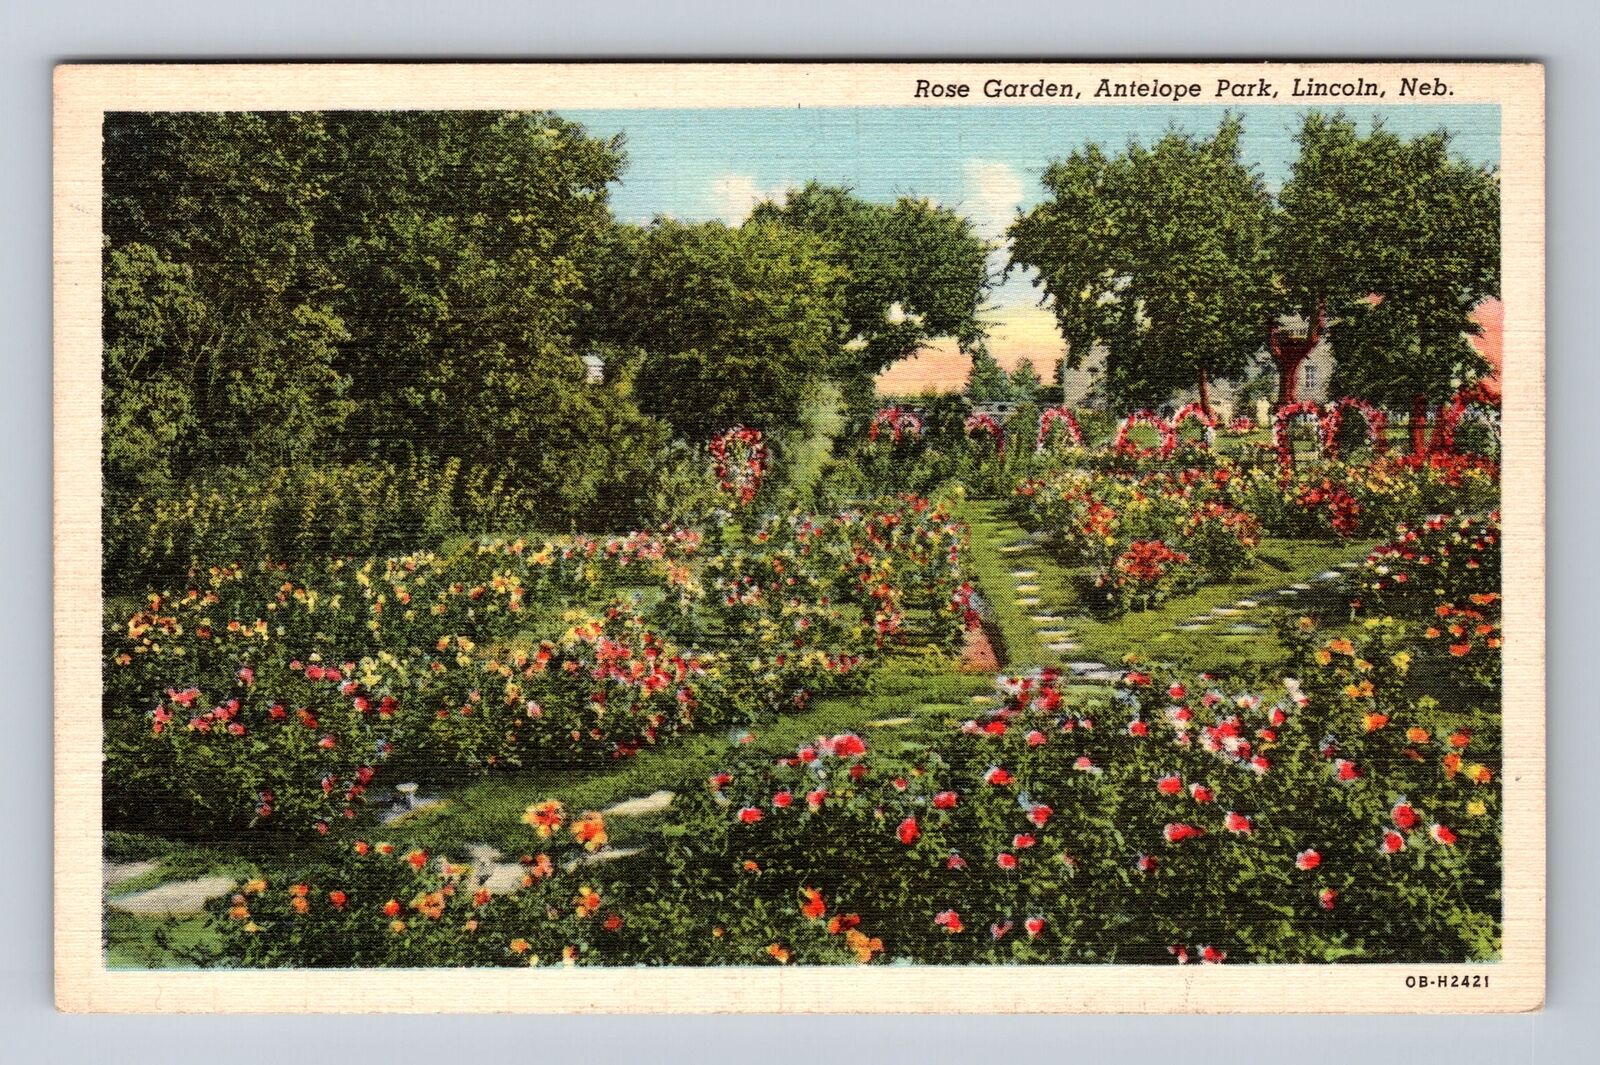 Lincoln NE-Nebraska, Antelope Park, Rose Garden, Souvenir Vintage Postcard